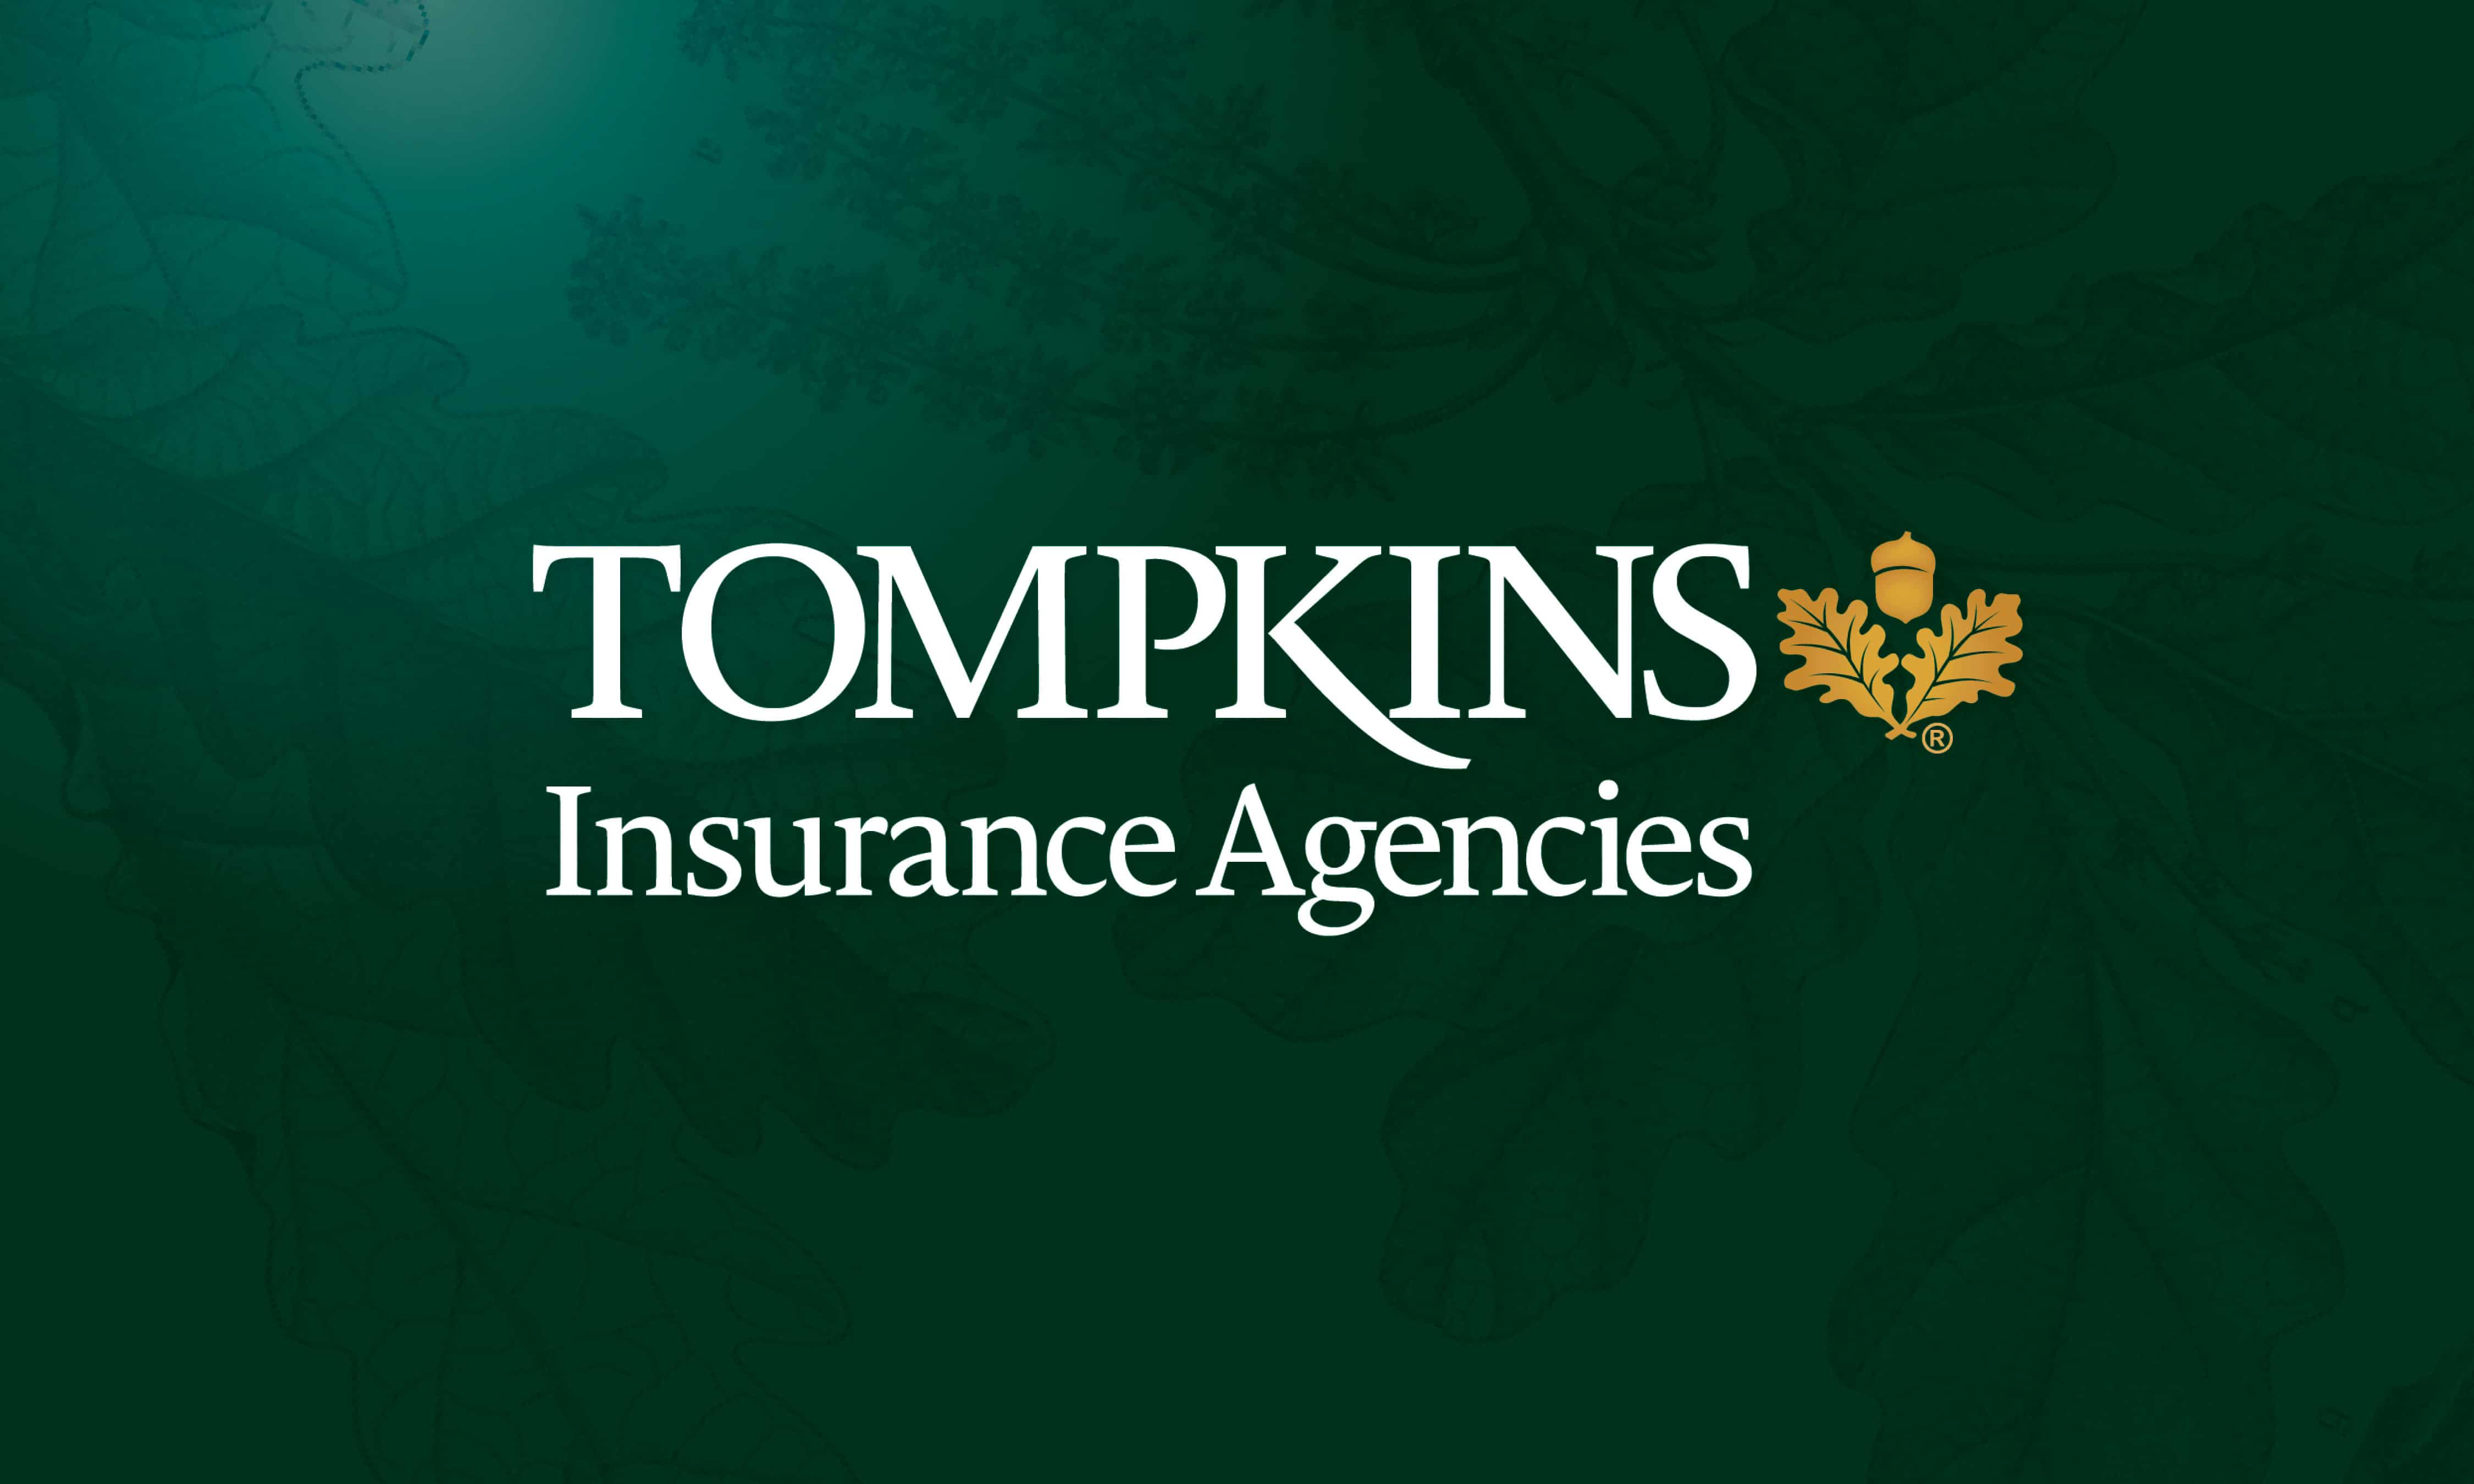 Tompkins Insurance Agencies Ranked Among Top 100 Agencies in the Nation